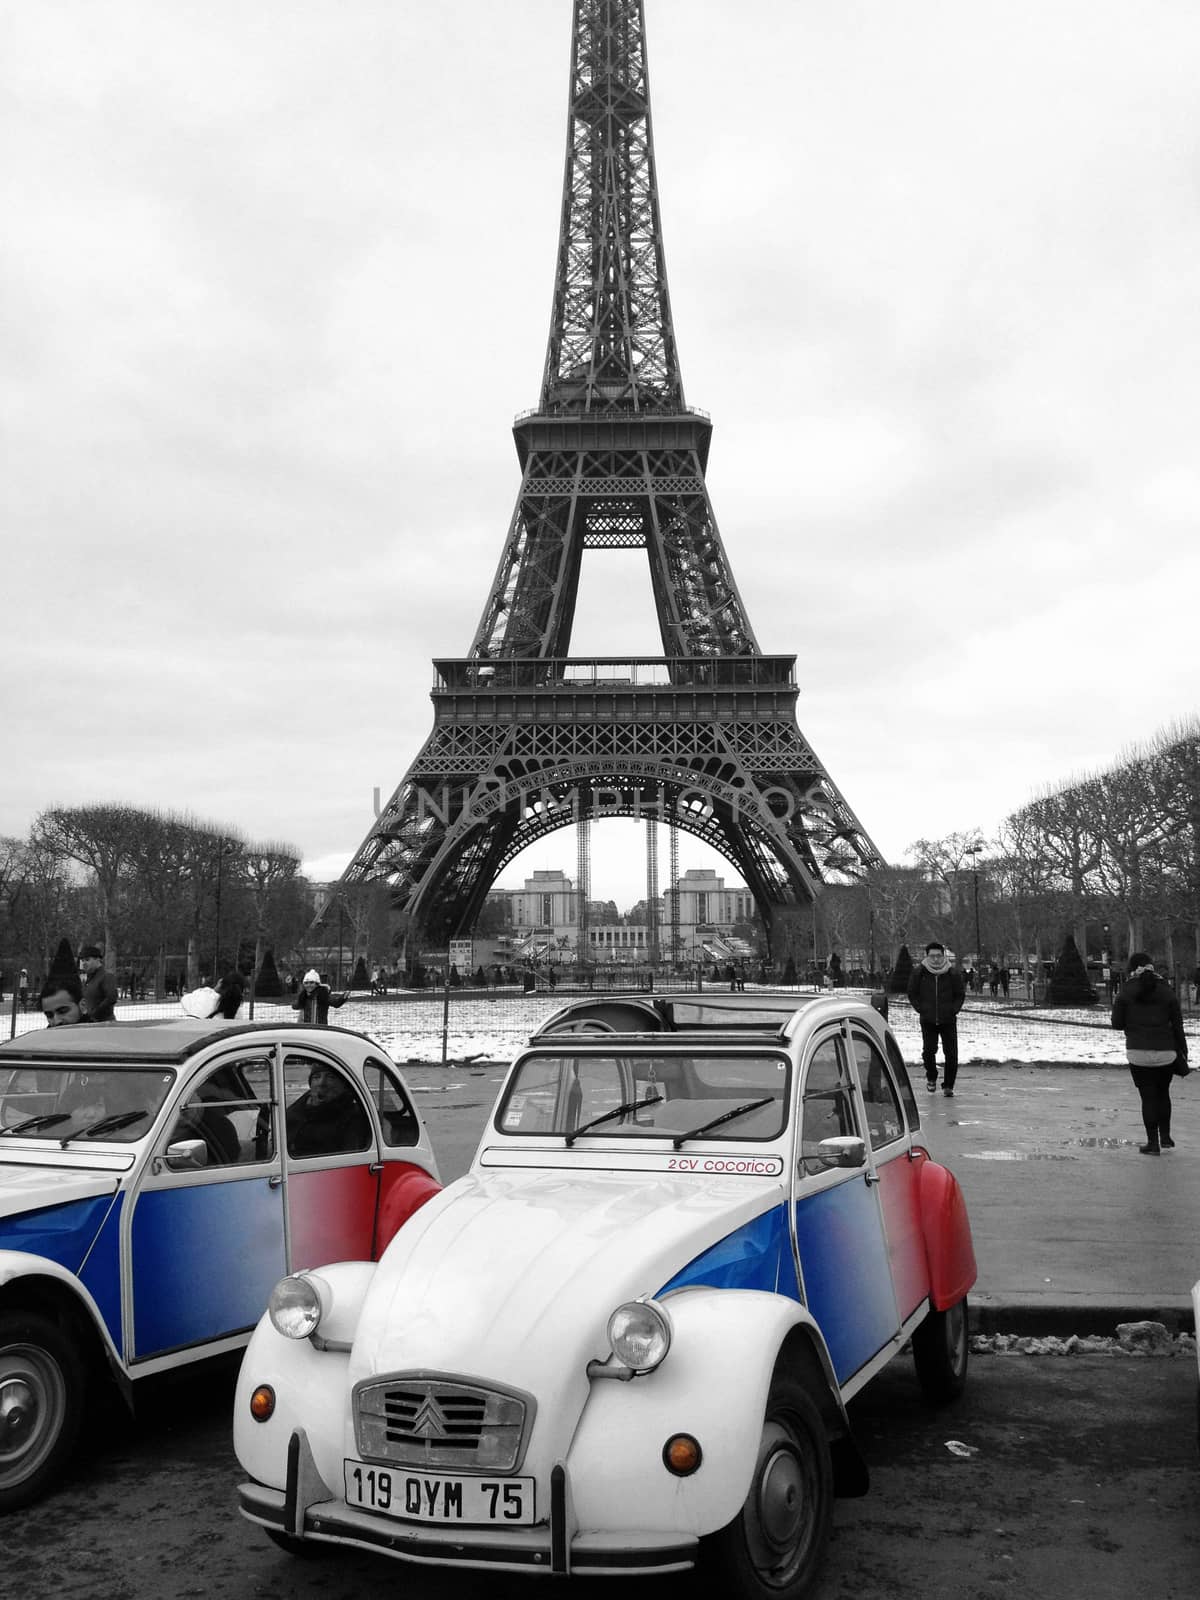 Citroen 2CV under the Eiffel Tower in Paris, France by bensib